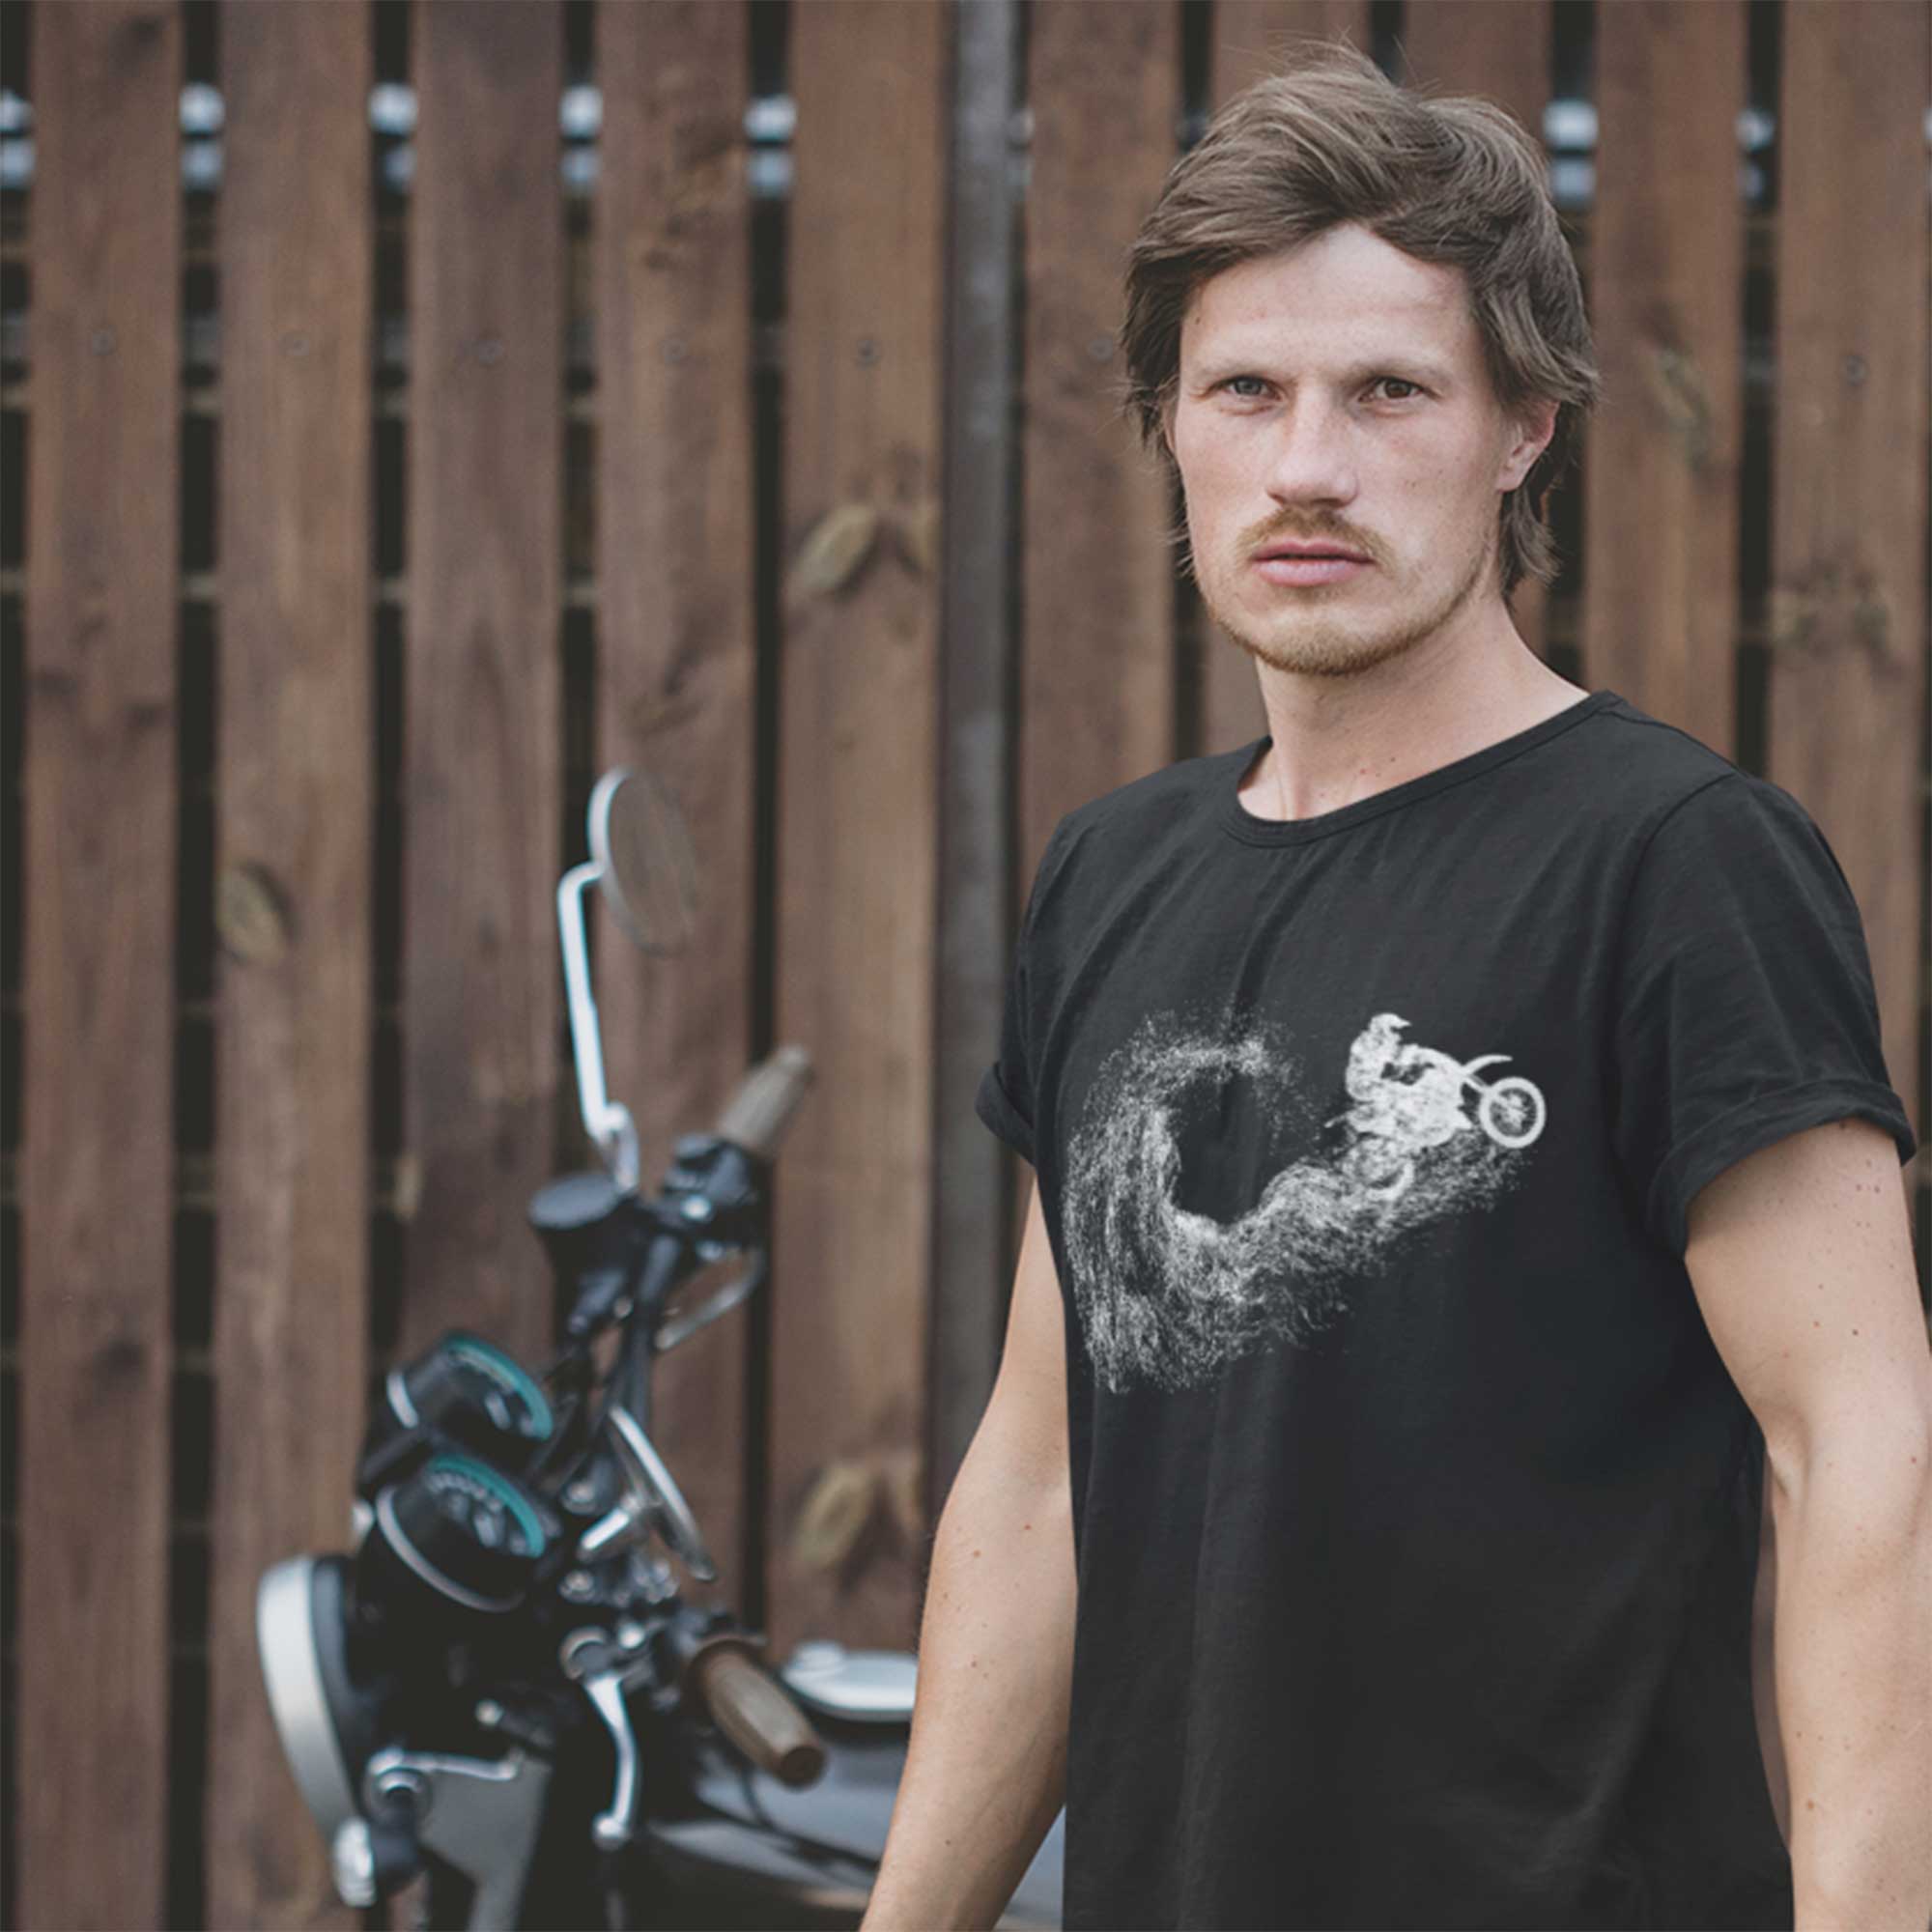 Motocross Particle Dot T-Shirt